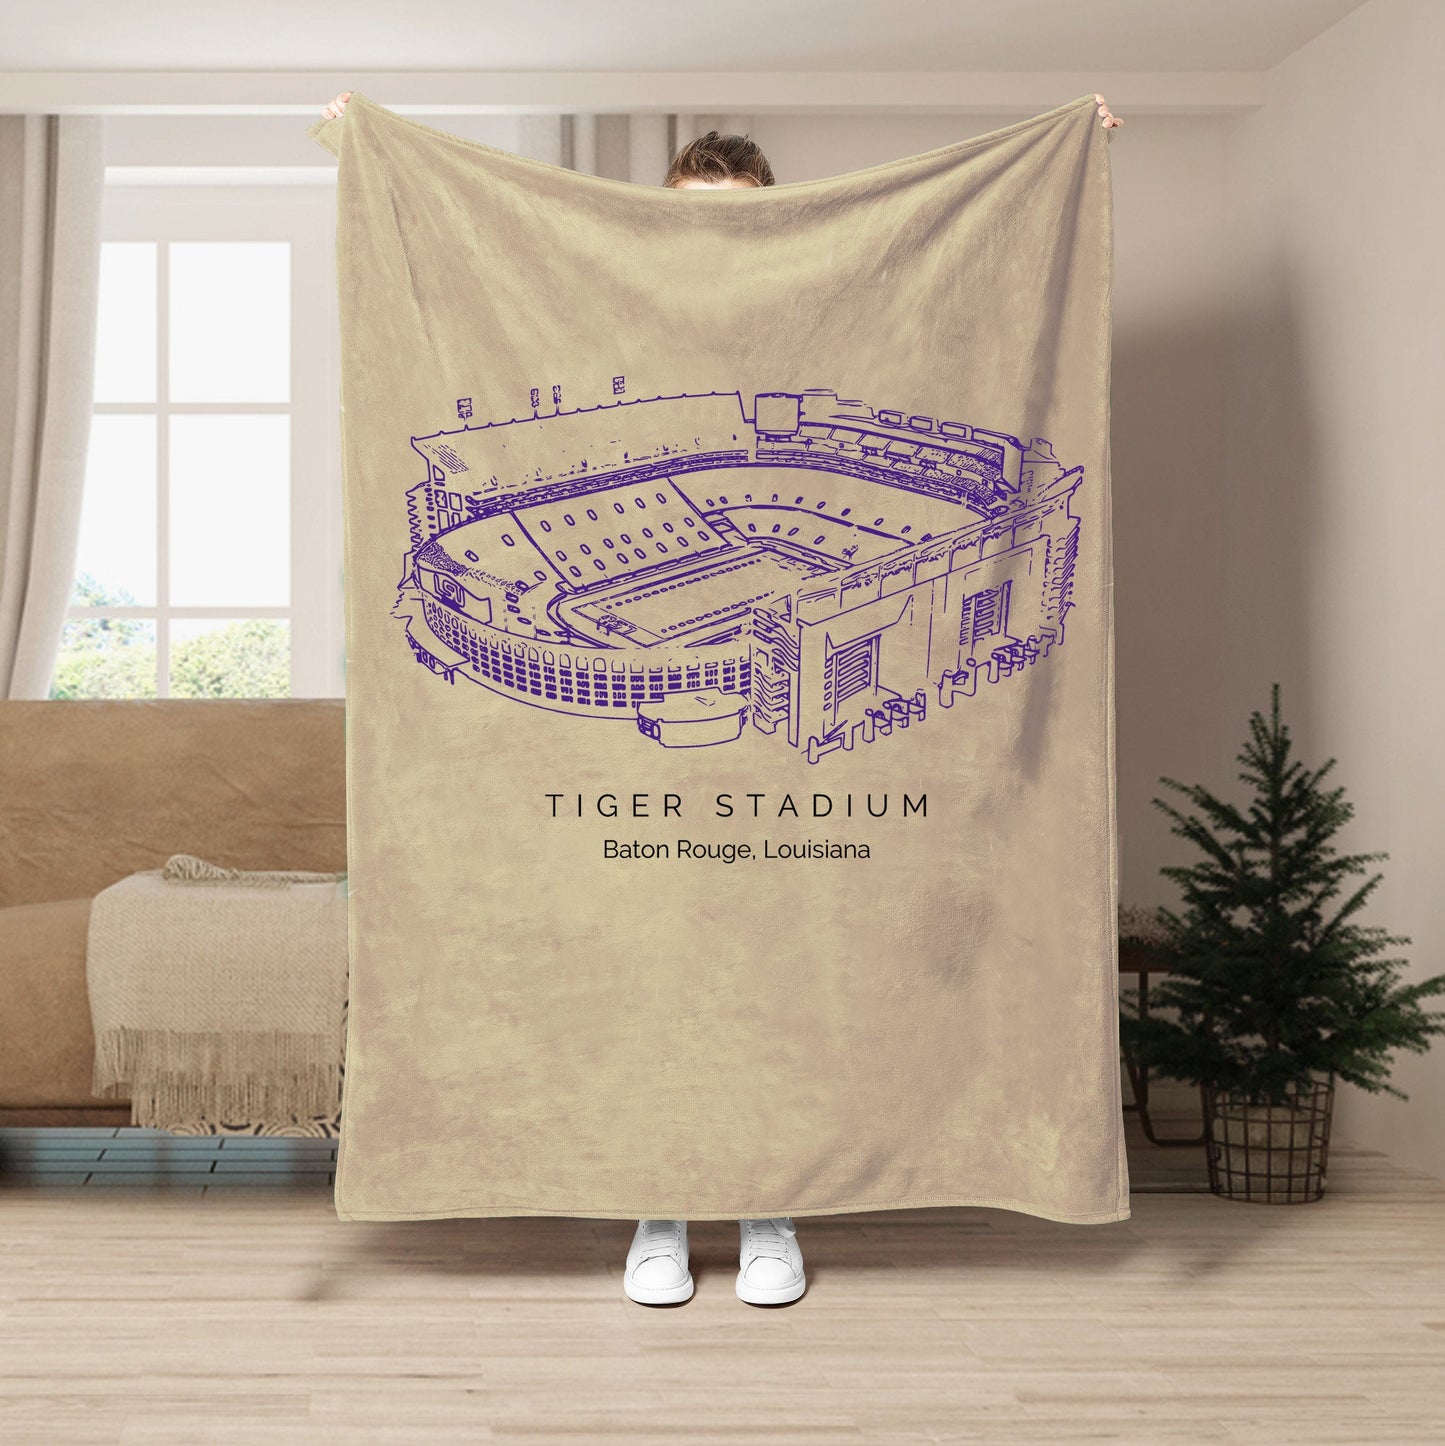 Tiger Stadium (LSU) - LSU Tigers football, College Coffee Blanket